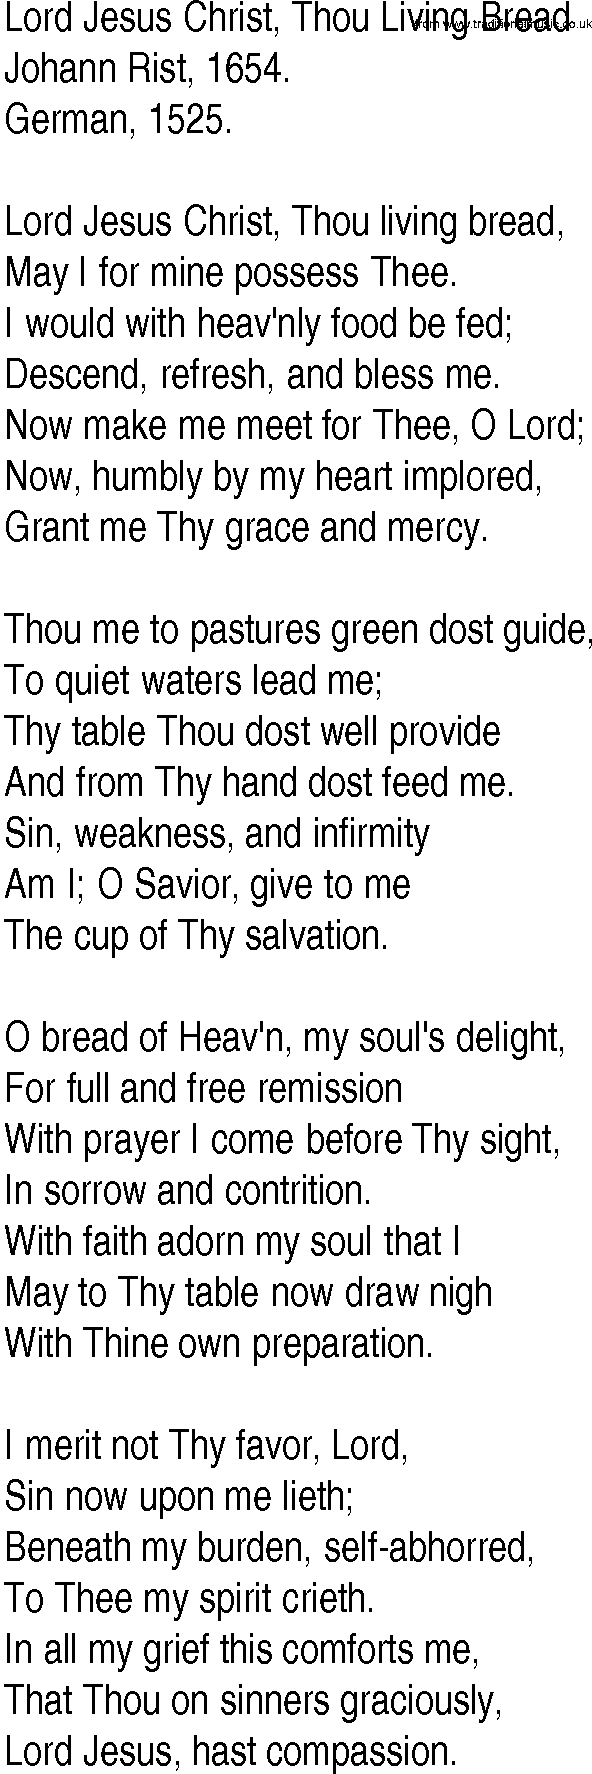 Hymn and Gospel Song: Lord Jesus Christ, Thou Living Bread by Johann Rist lyrics